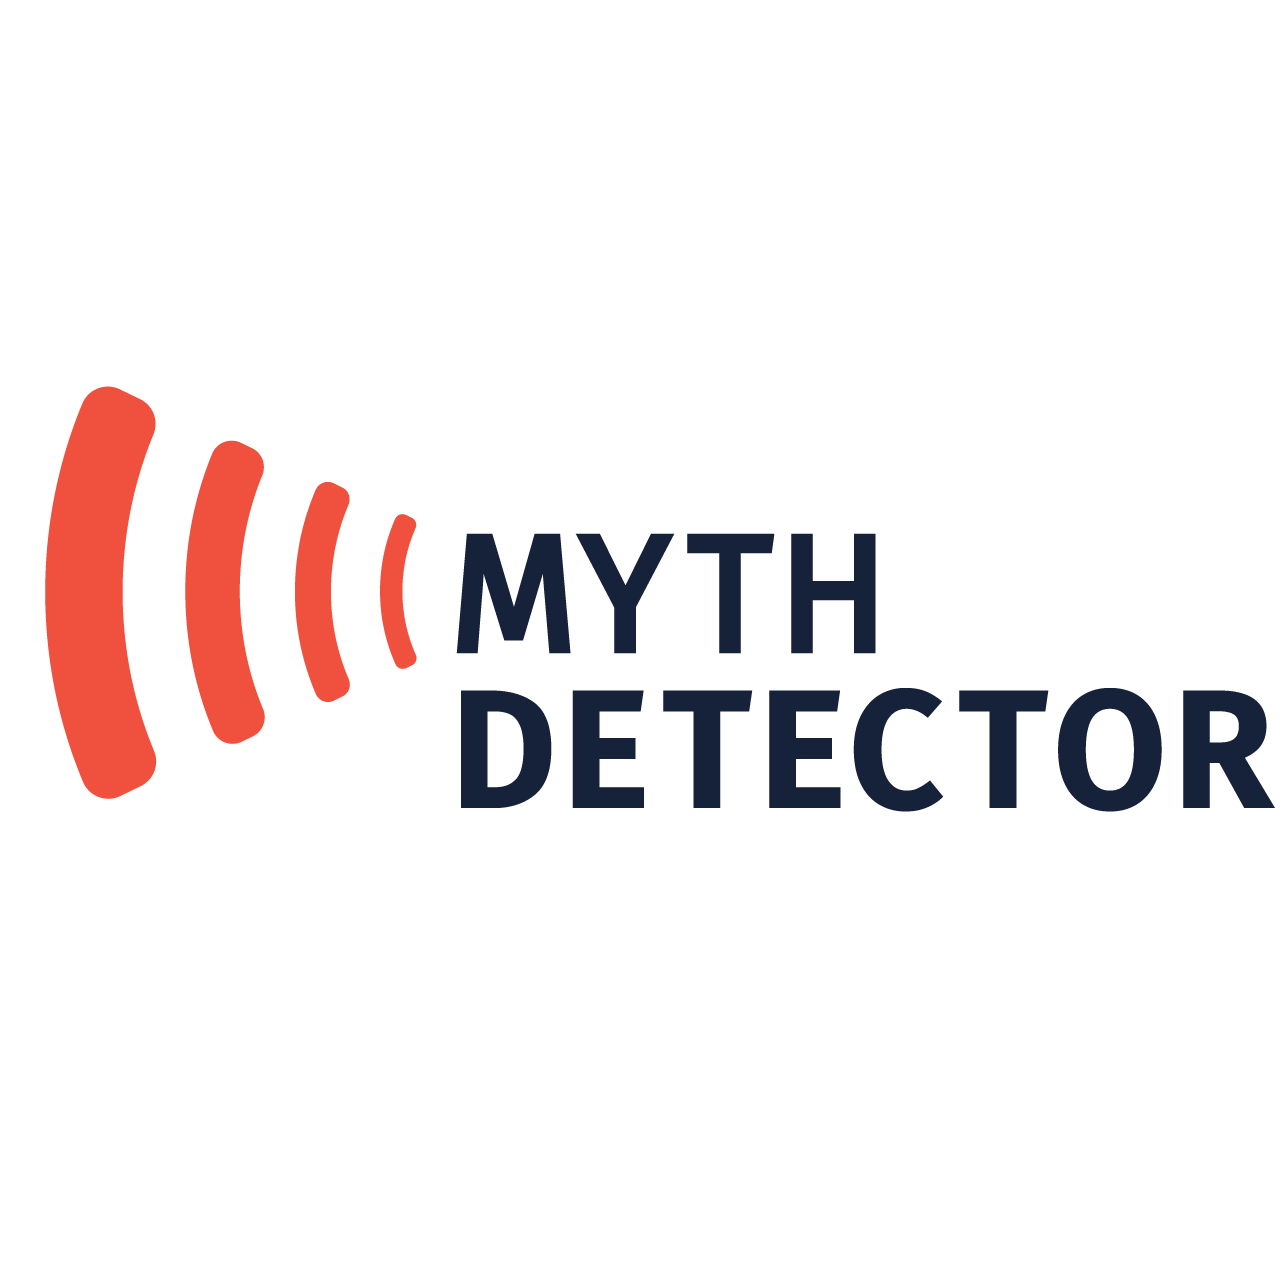 Myth Detector